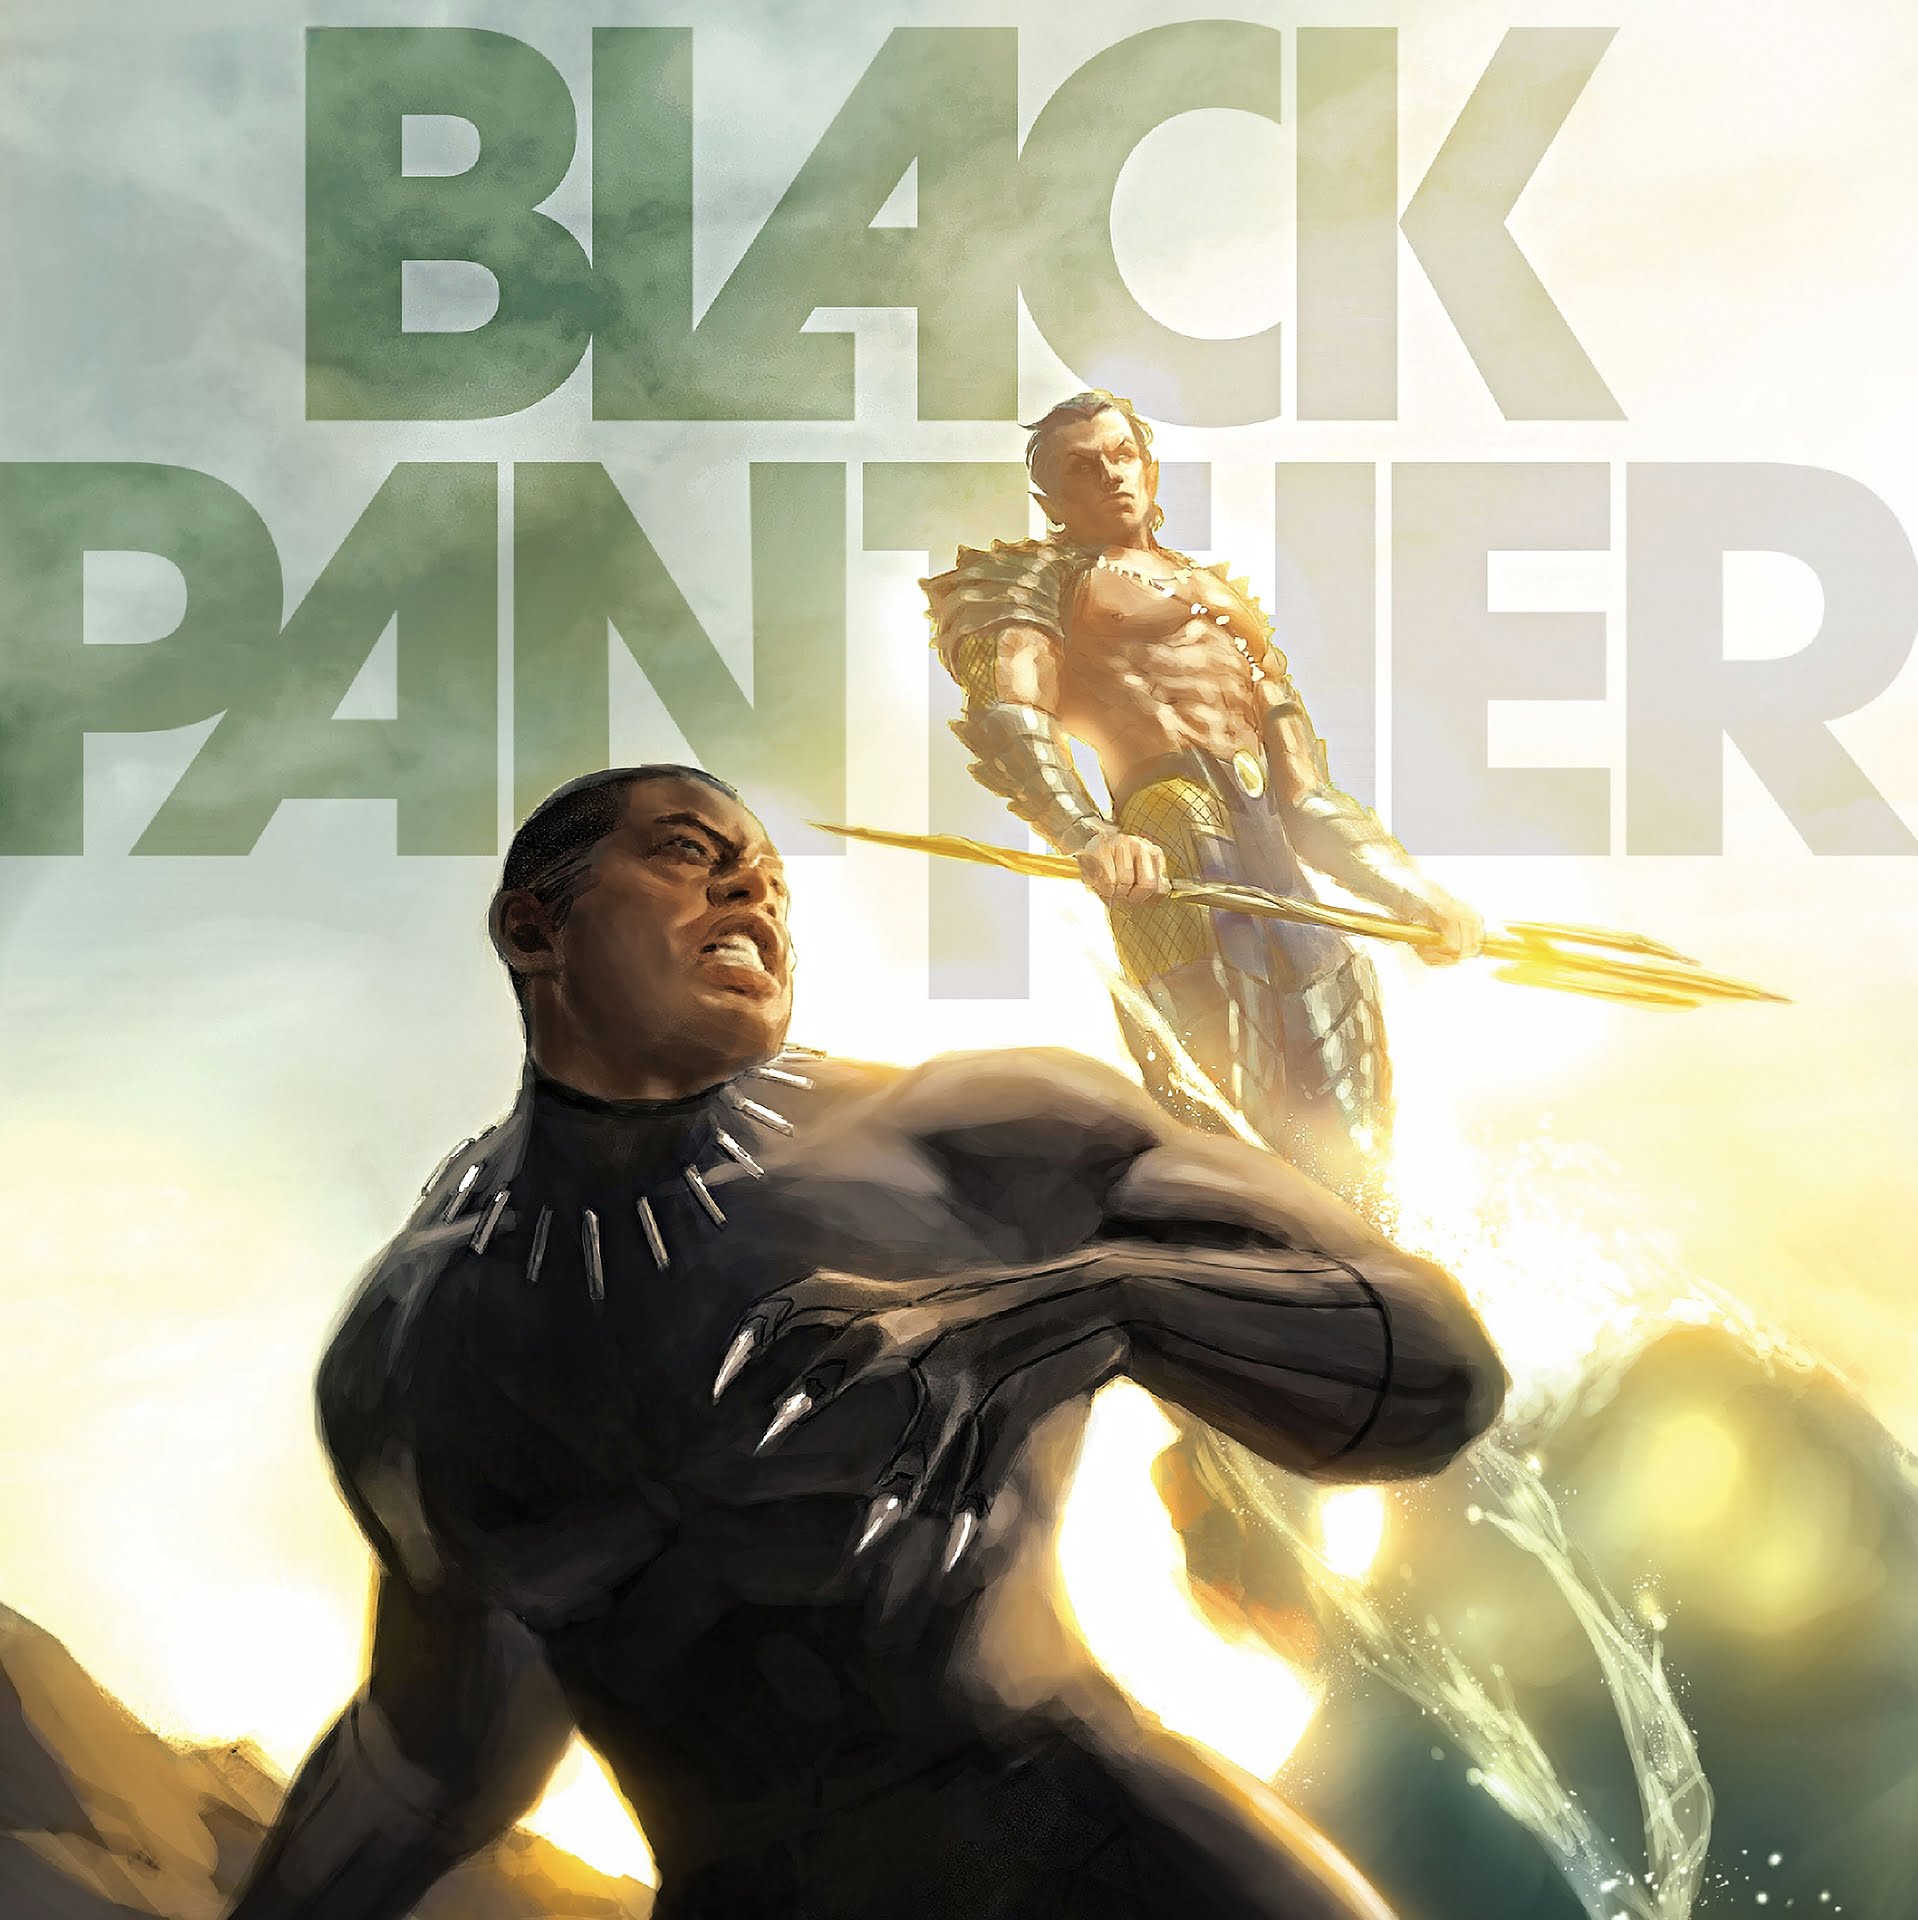 Marvel's Black Panther comic book announcement via 360 MAGAZINE.